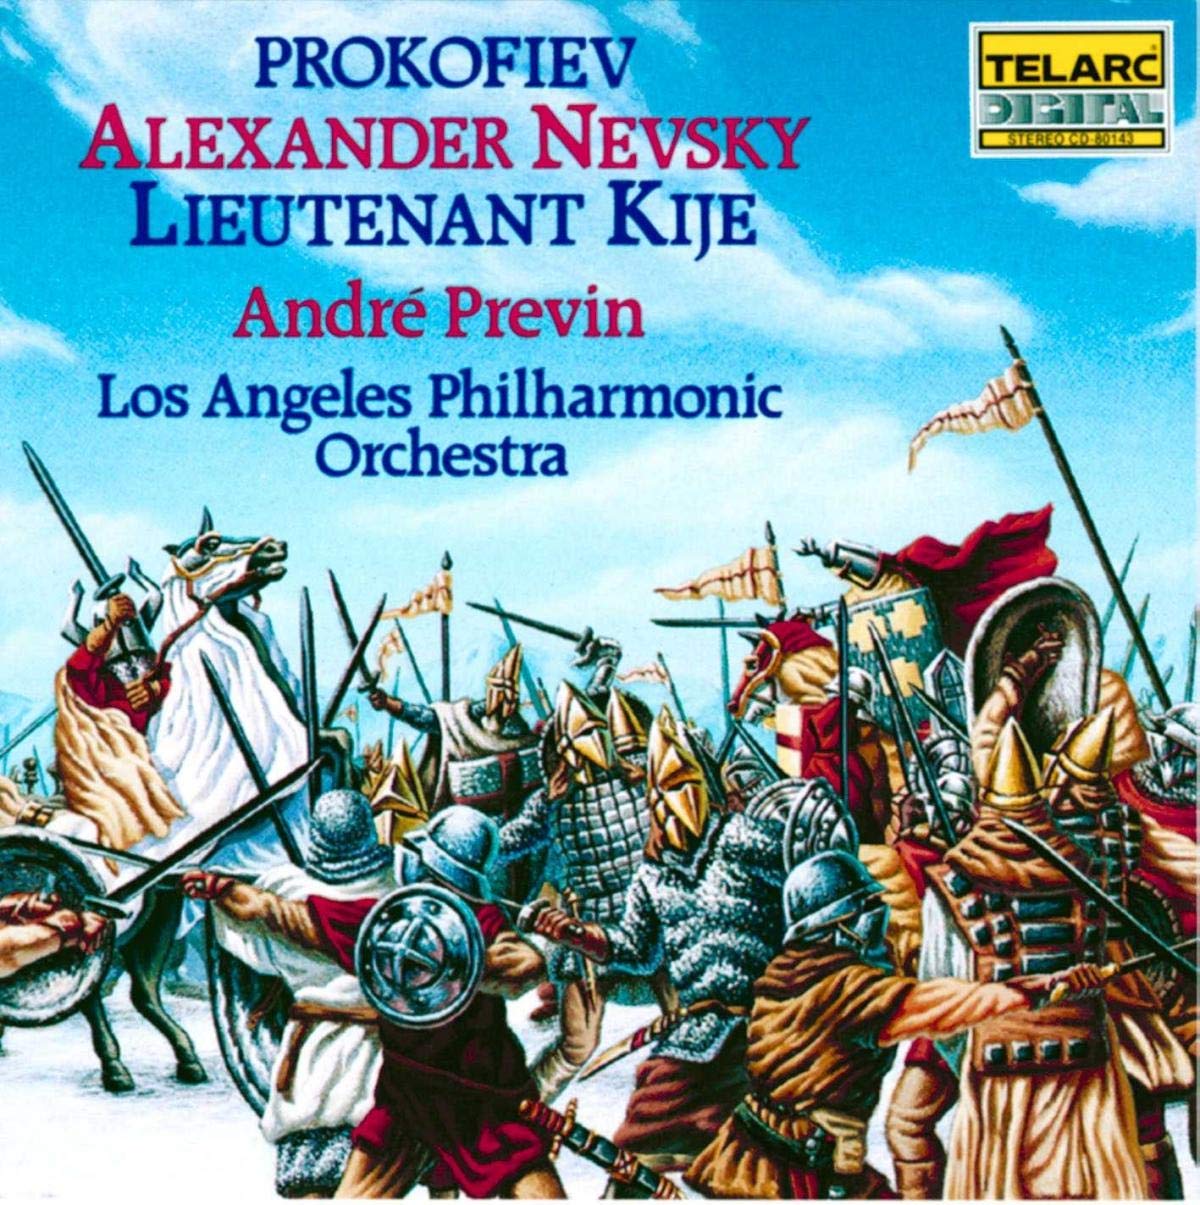 PROKOFIEV: LIEUTENANT KIJE (SUITE); ALEXANDER NEVSKY - Andre Previn, Los Angeles Philharmonic